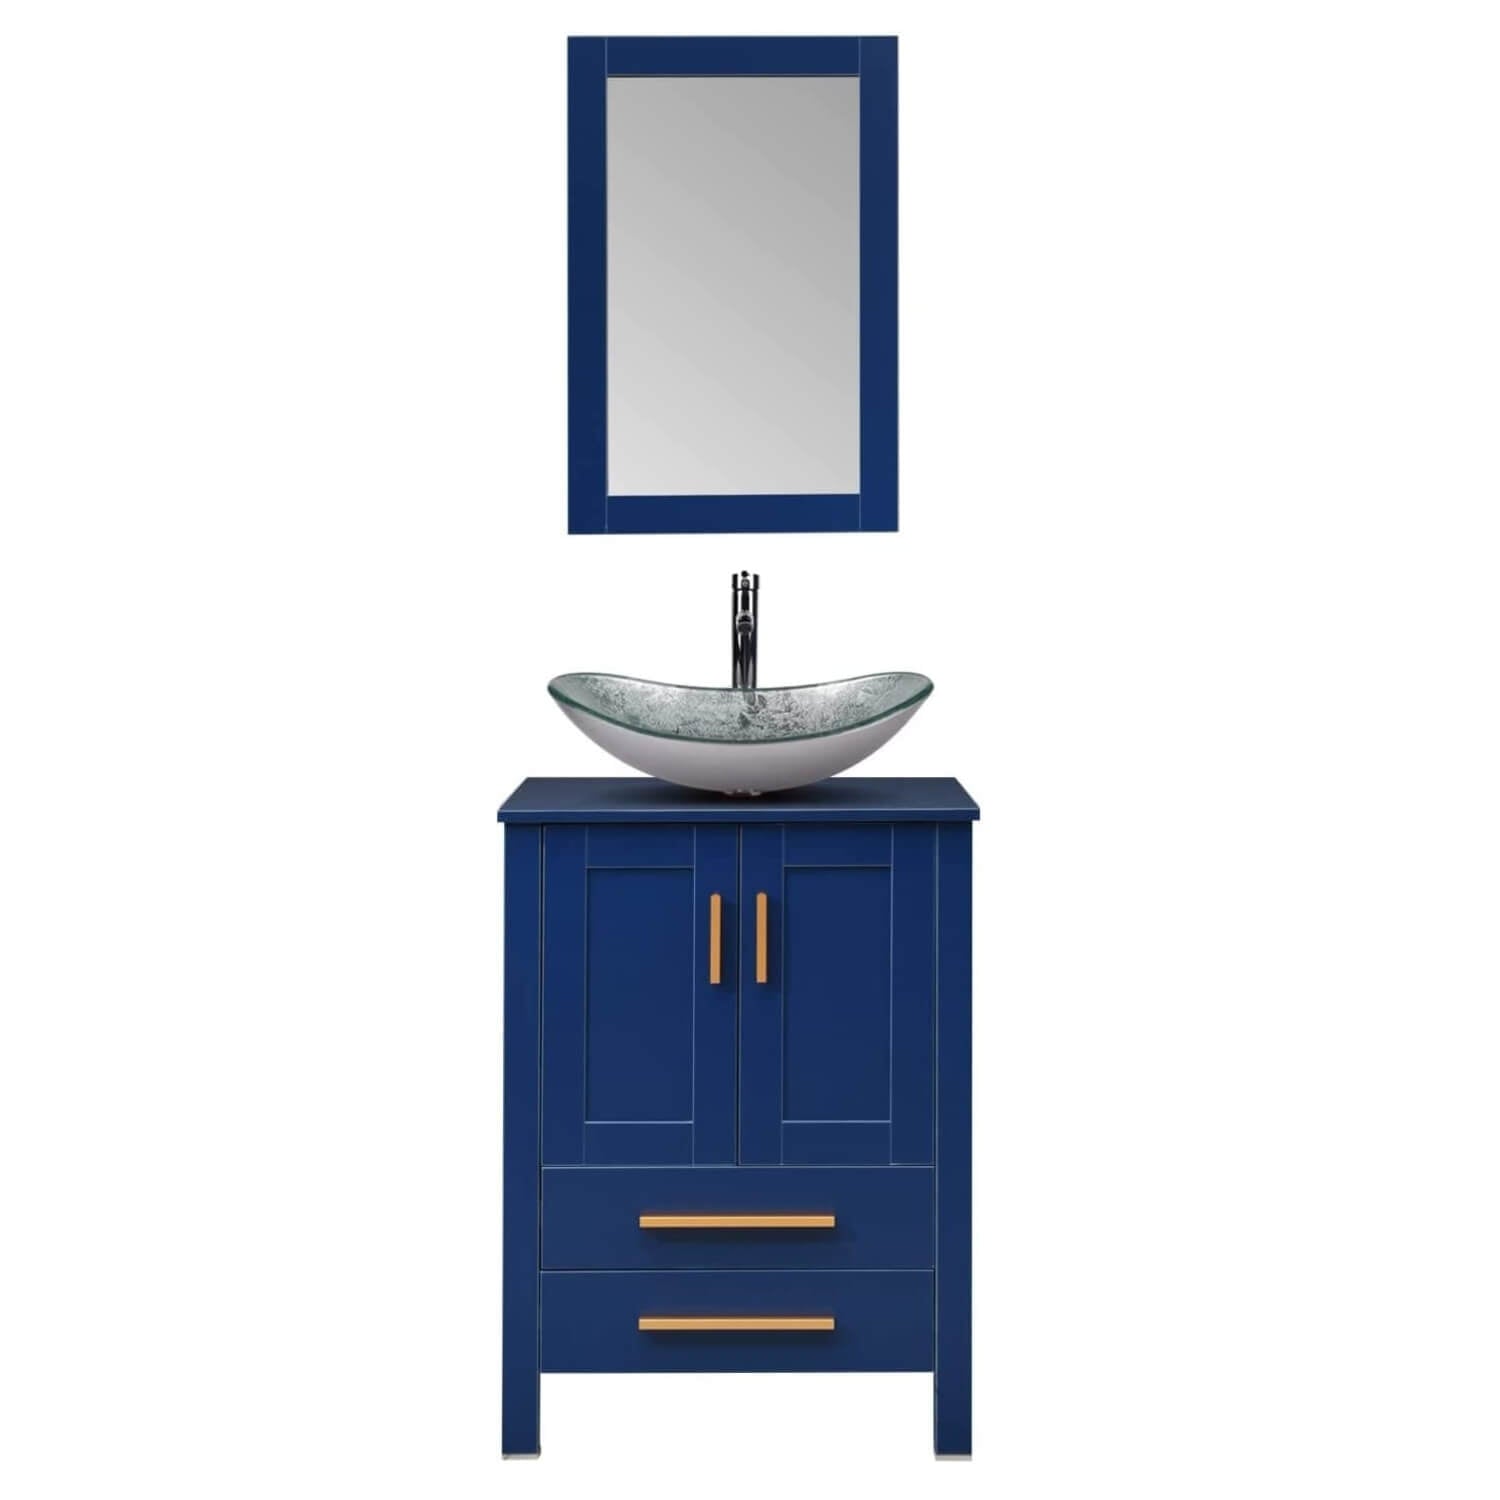 Elecwish 24'' bathroom wood vanity with silver boat glass sink